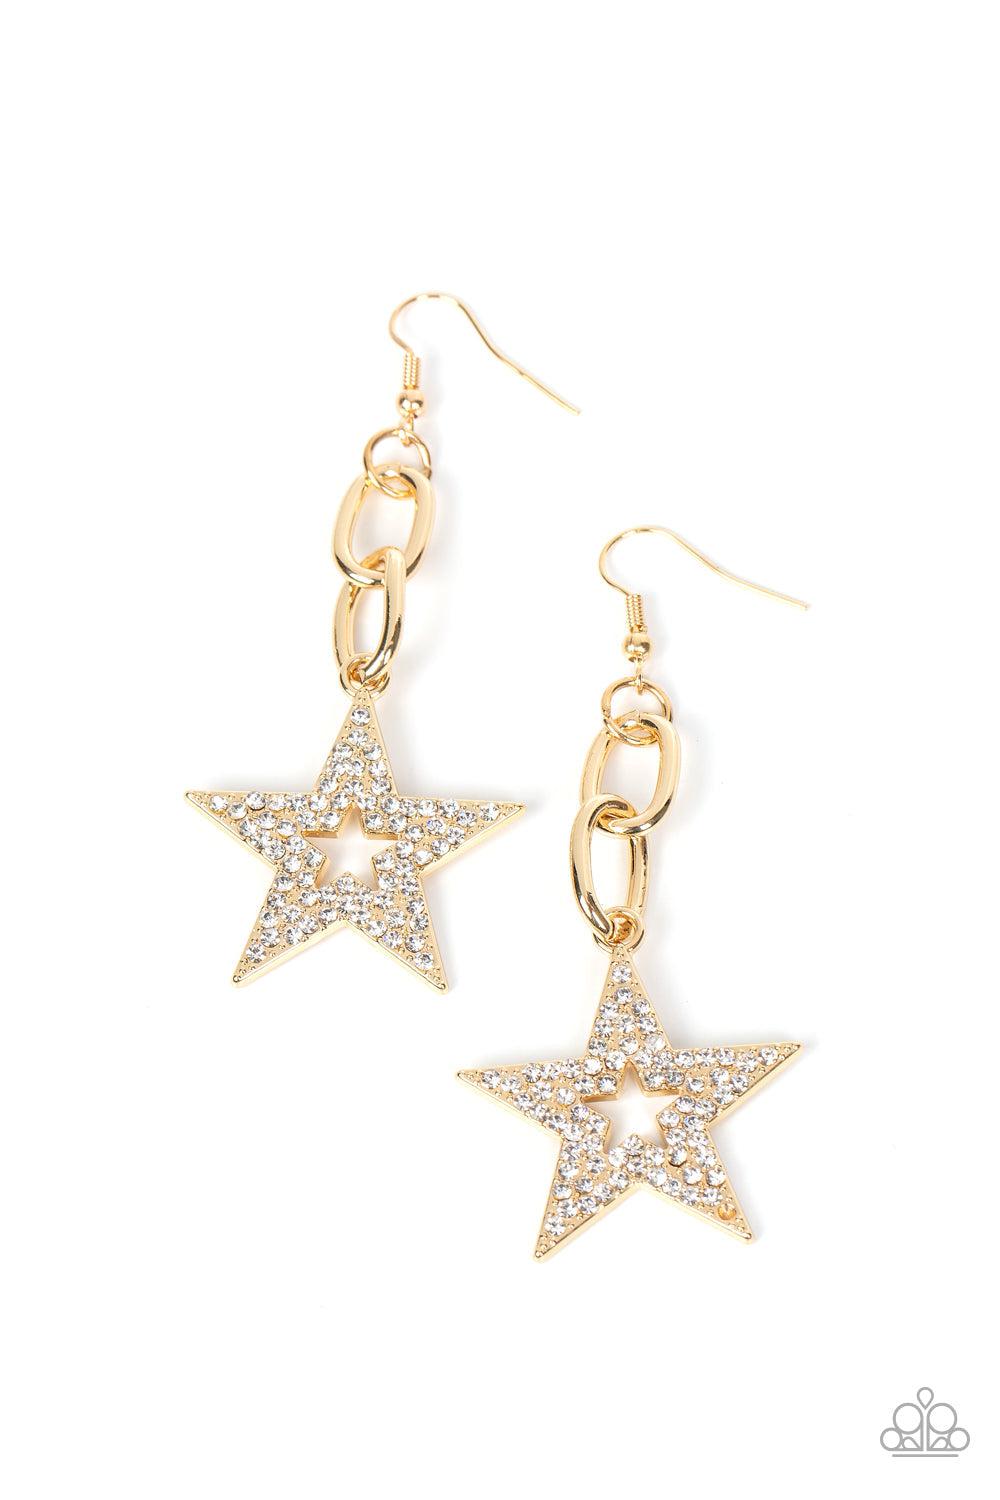 Cosmic Celebrity Gold & White Rhinestone Star Earrings - Paparazzi Accessories- lightbox - CarasShop.com - $5 Jewelry by Cara Jewels